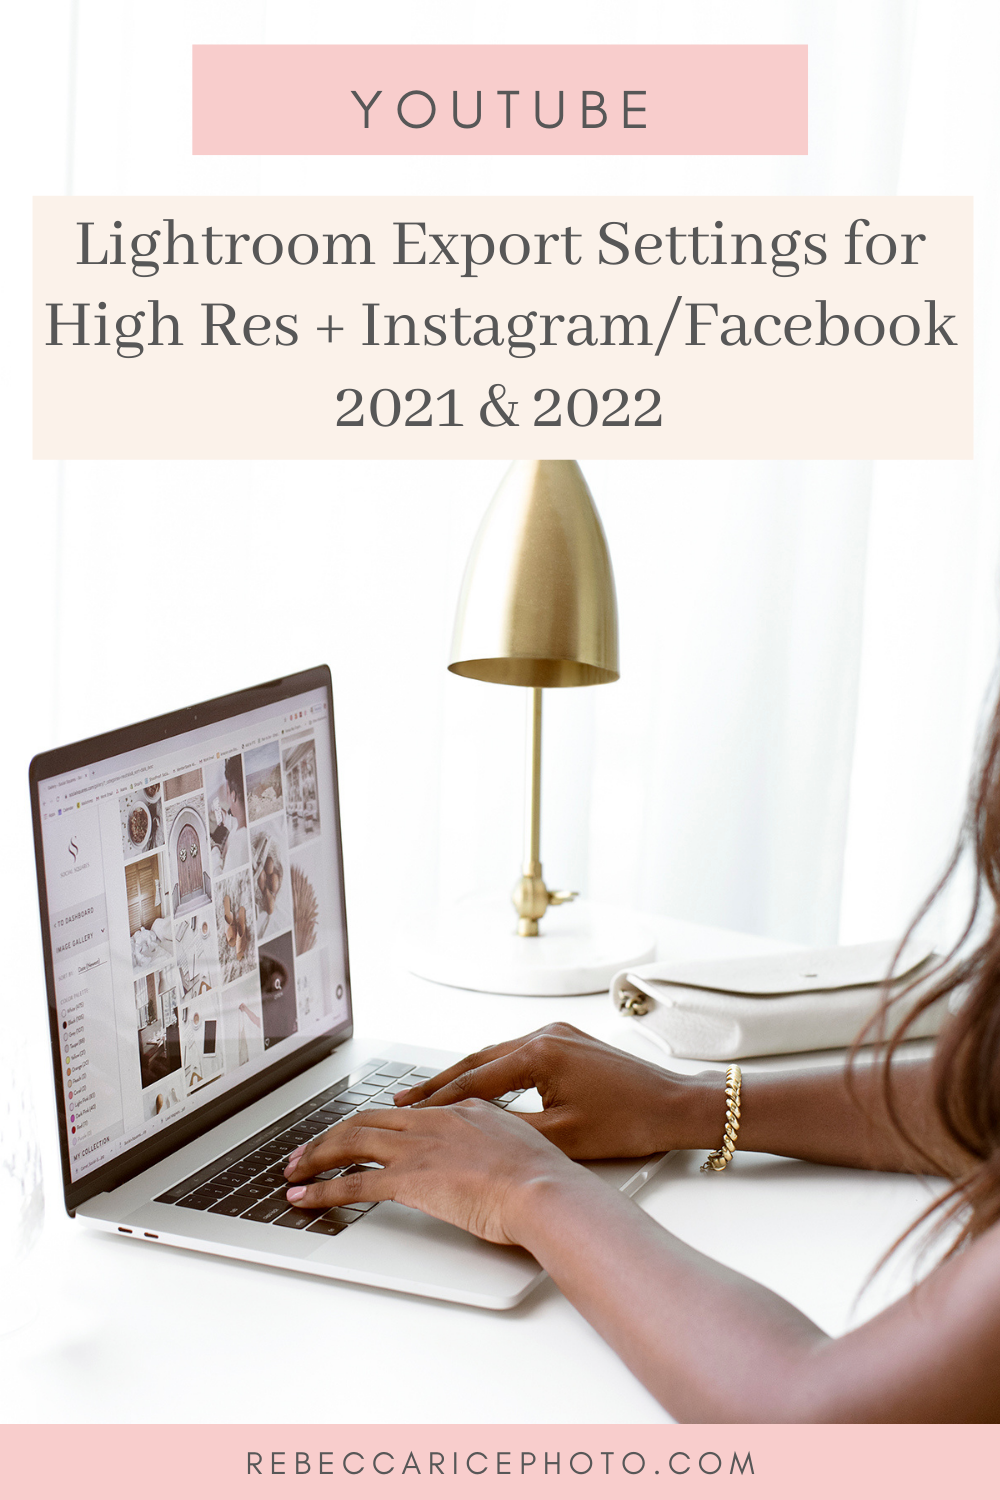  Lightroom Export Settings for High Res + Instagram/Facebook 2021 & 2022